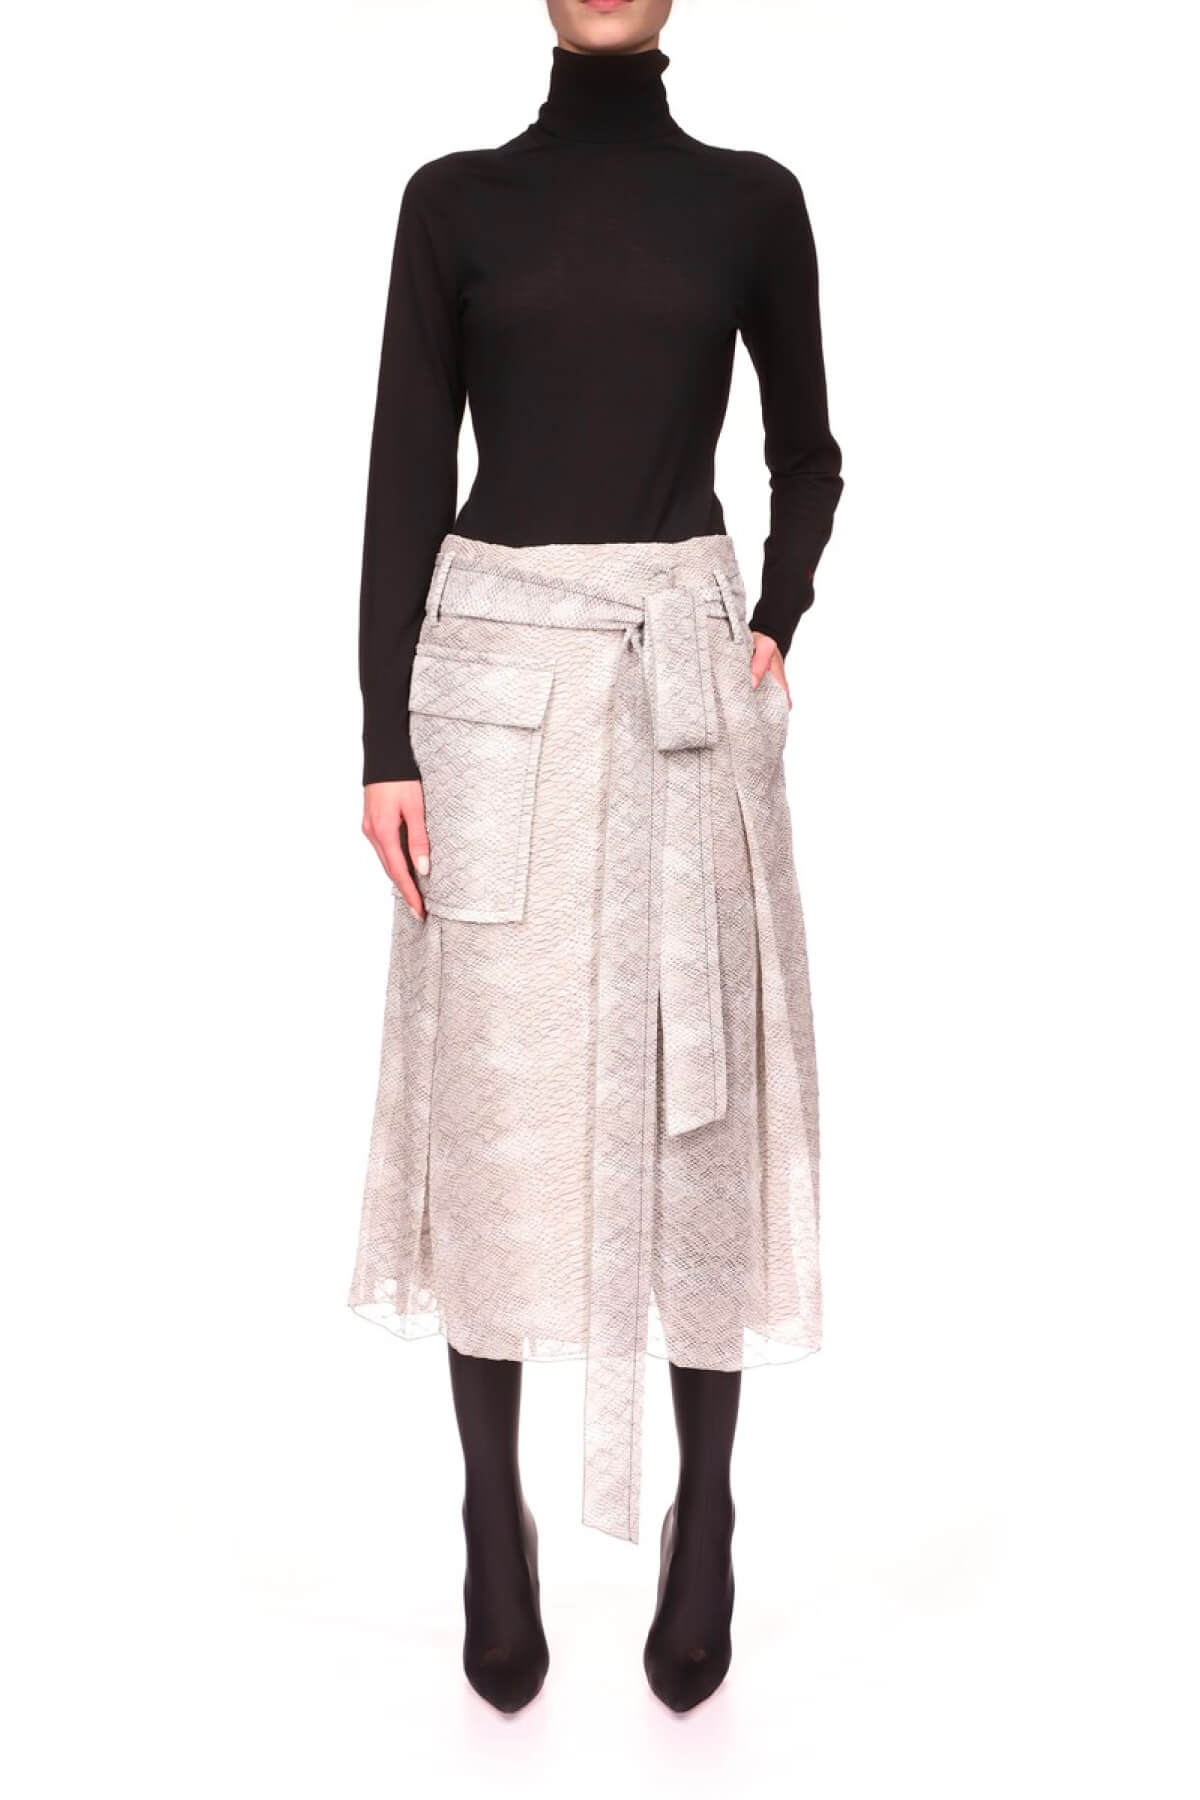 Victoria Beckham Snake Trench Skirt - Silver